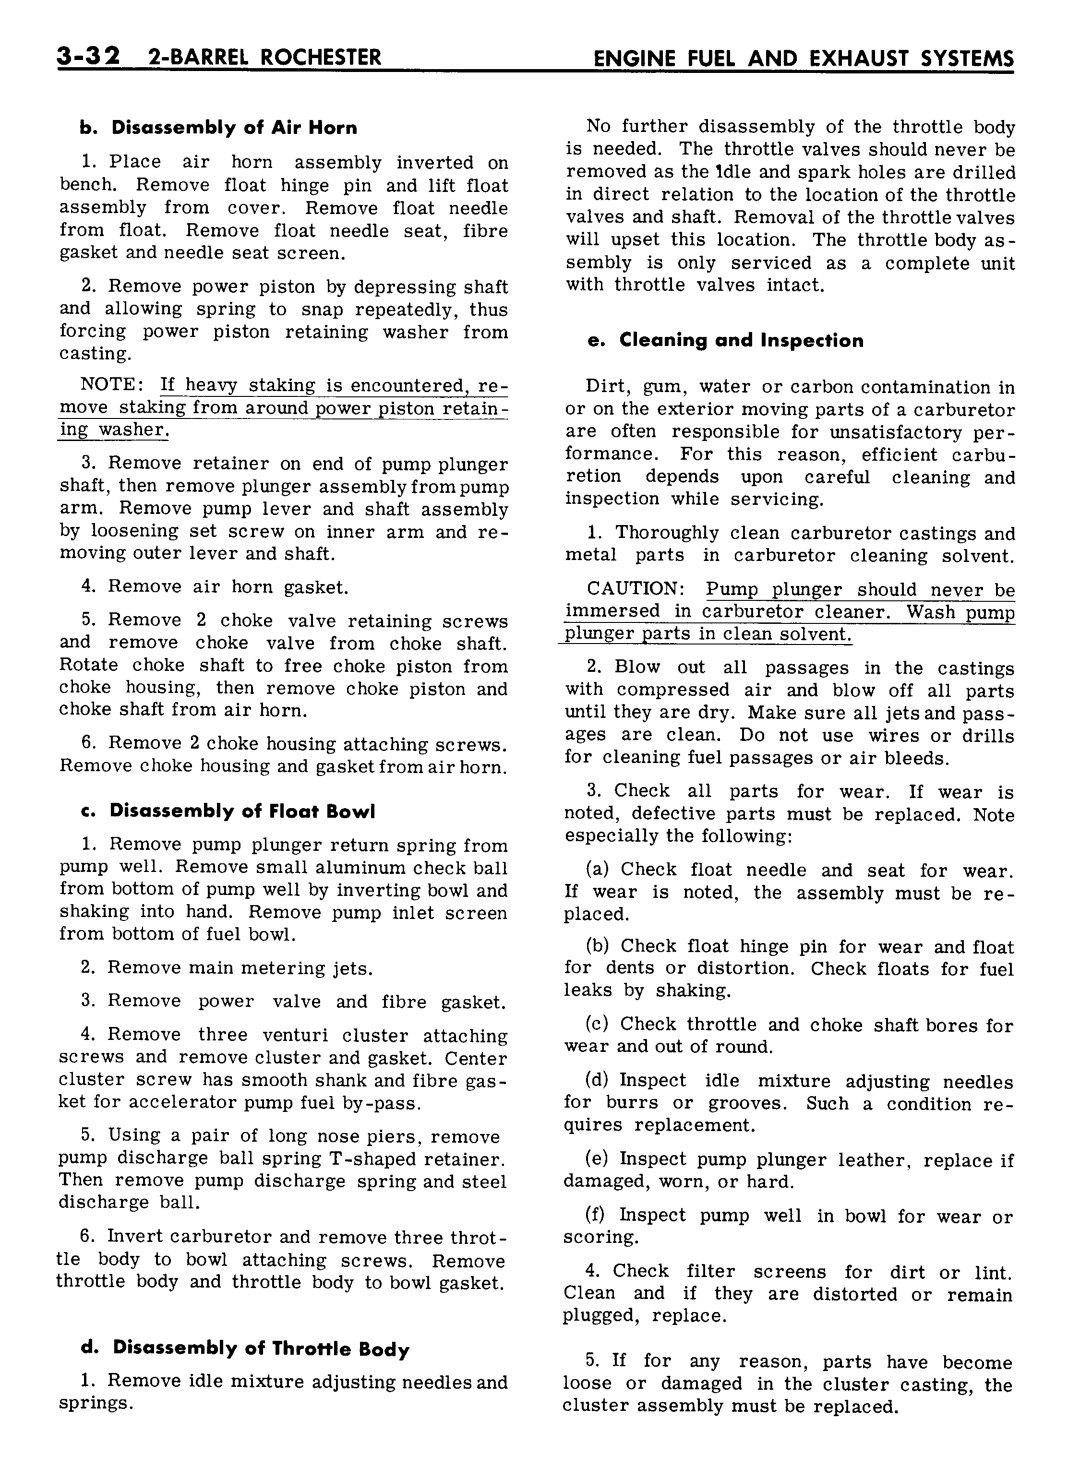 n_04 1961 Buick Shop Manual - Engine Fuel & Exhaust-032-032.jpg